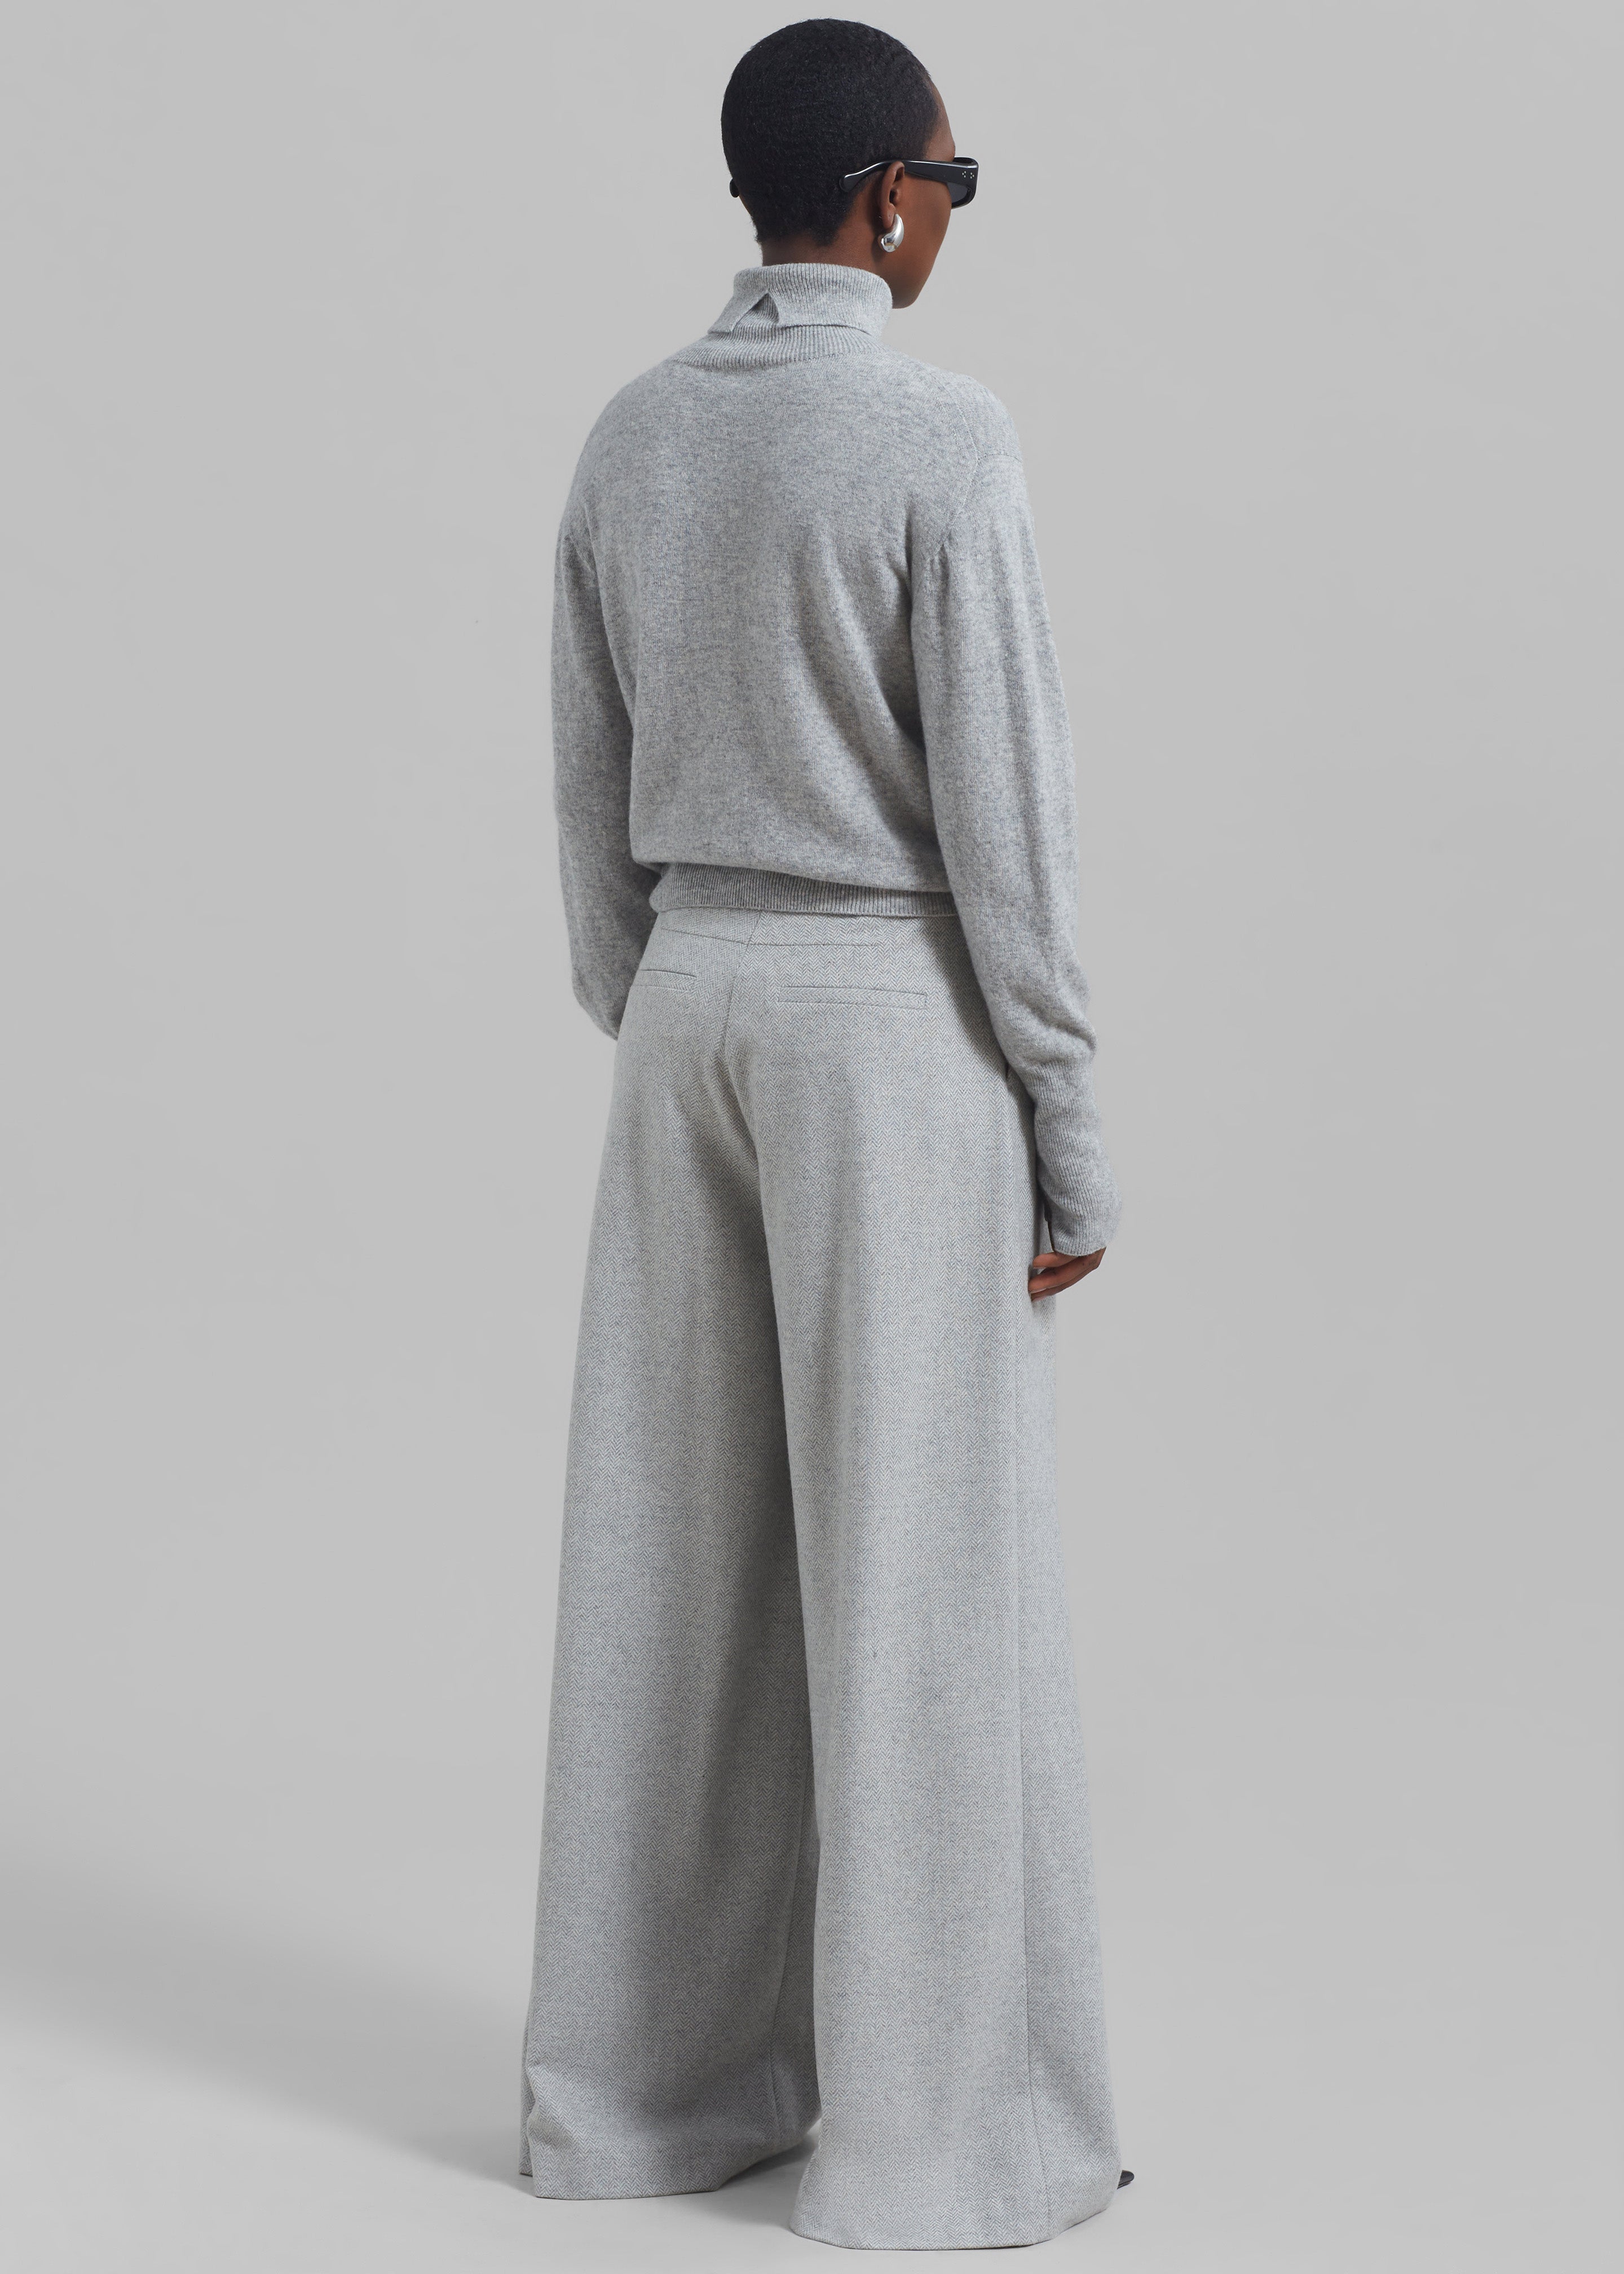 The Garment Trento Pants - Heather Grey Herringbone - 8